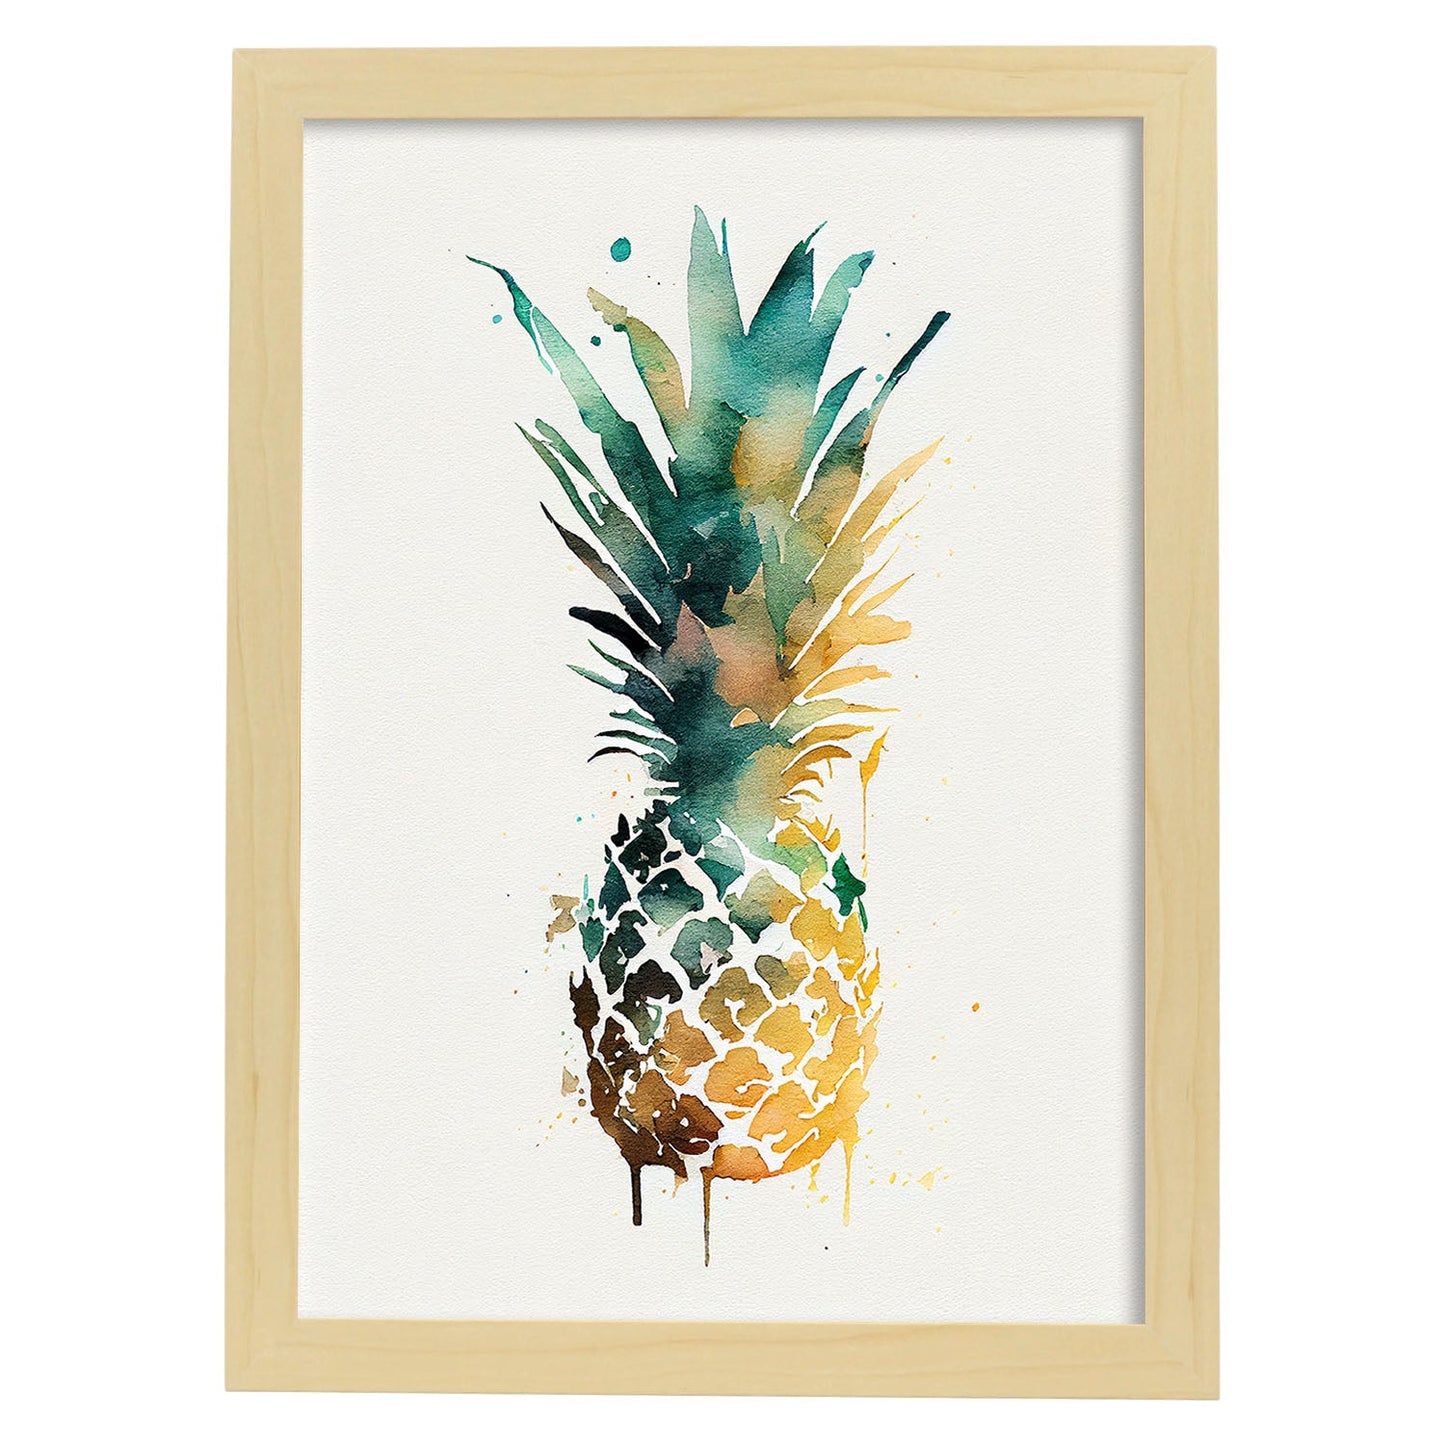 Nacnic minimalist Pineapple_5. Aesthetic Wall Art Prints for Bedroom or Living Room Design.-Artwork-Nacnic-A4-Marco Madera Clara-Nacnic Estudio SL